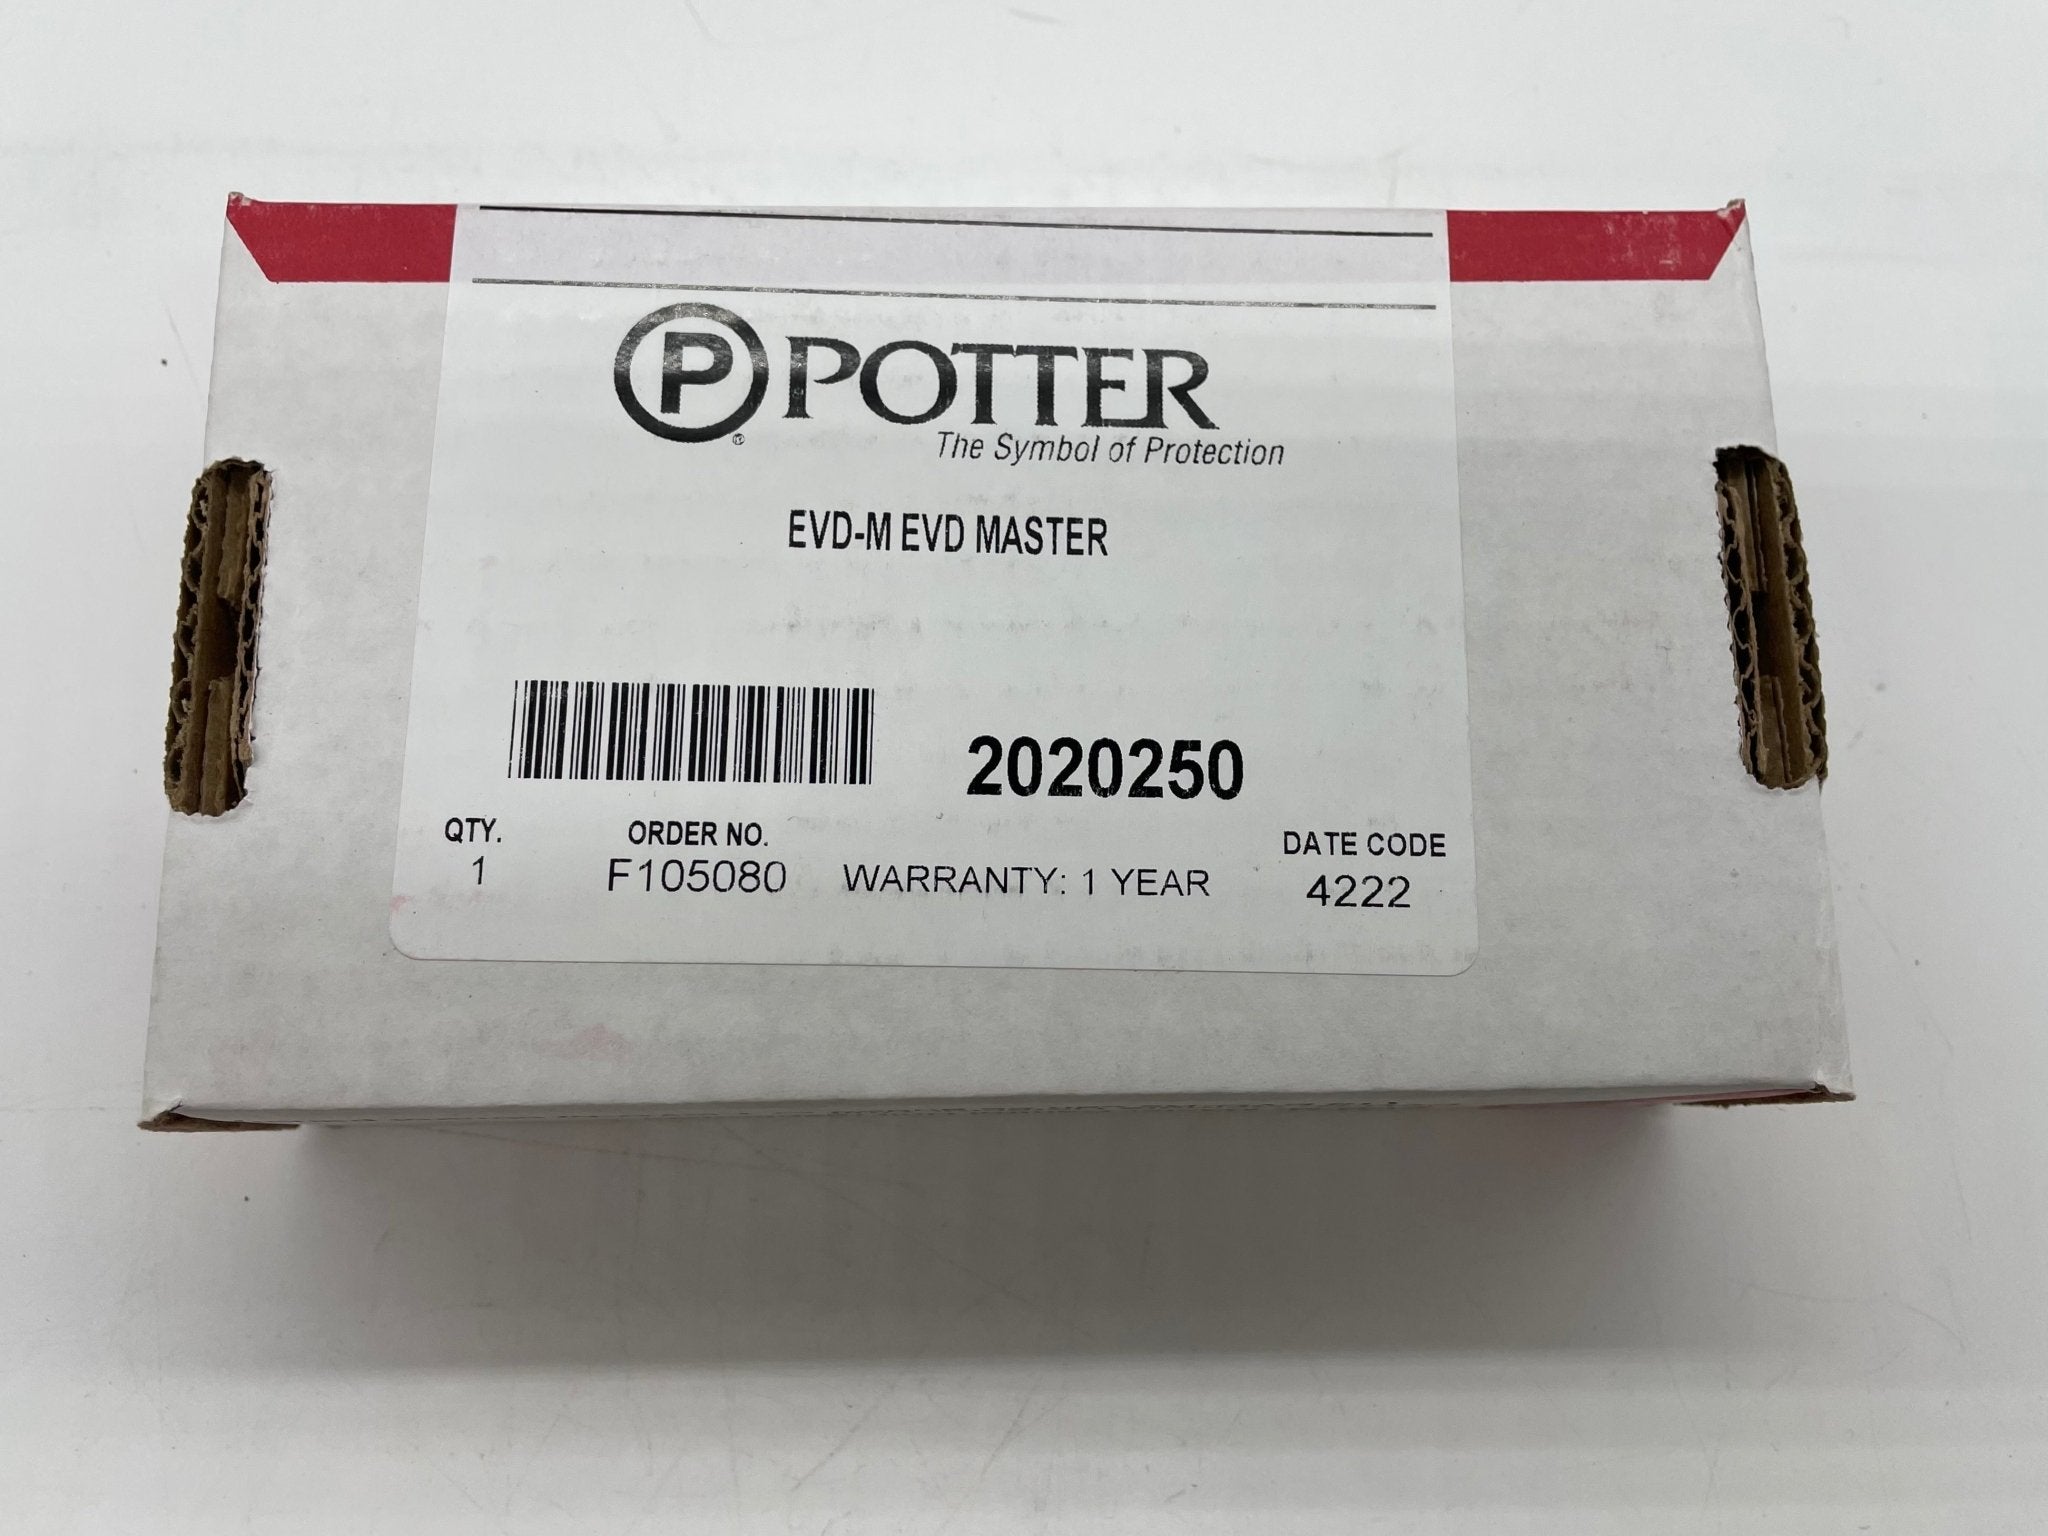 Potter EVD-M - The Fire Alarm Supplier